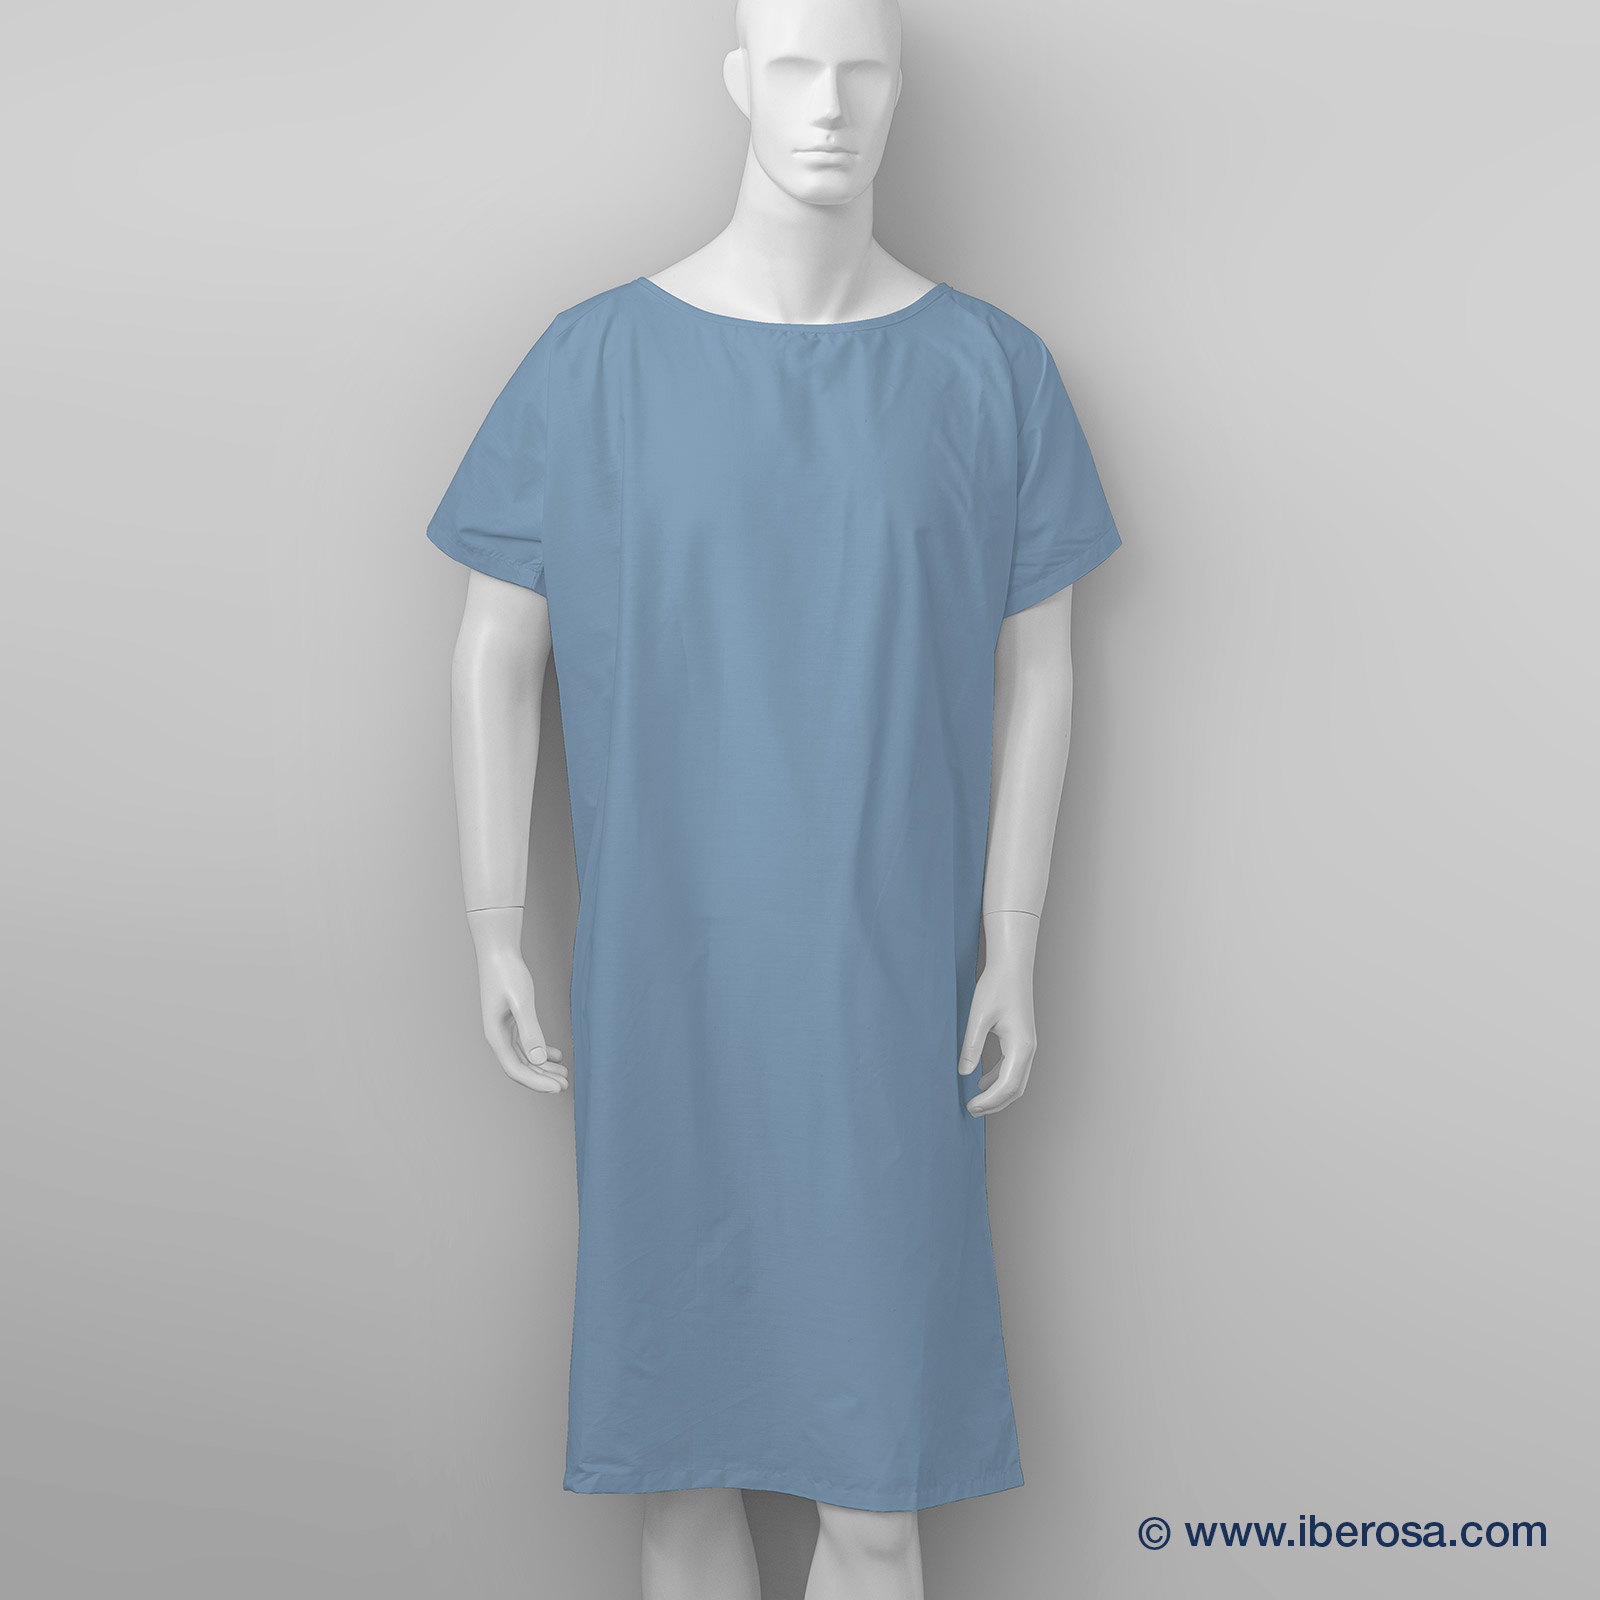 Light Blue hospital patient gown short sleeve